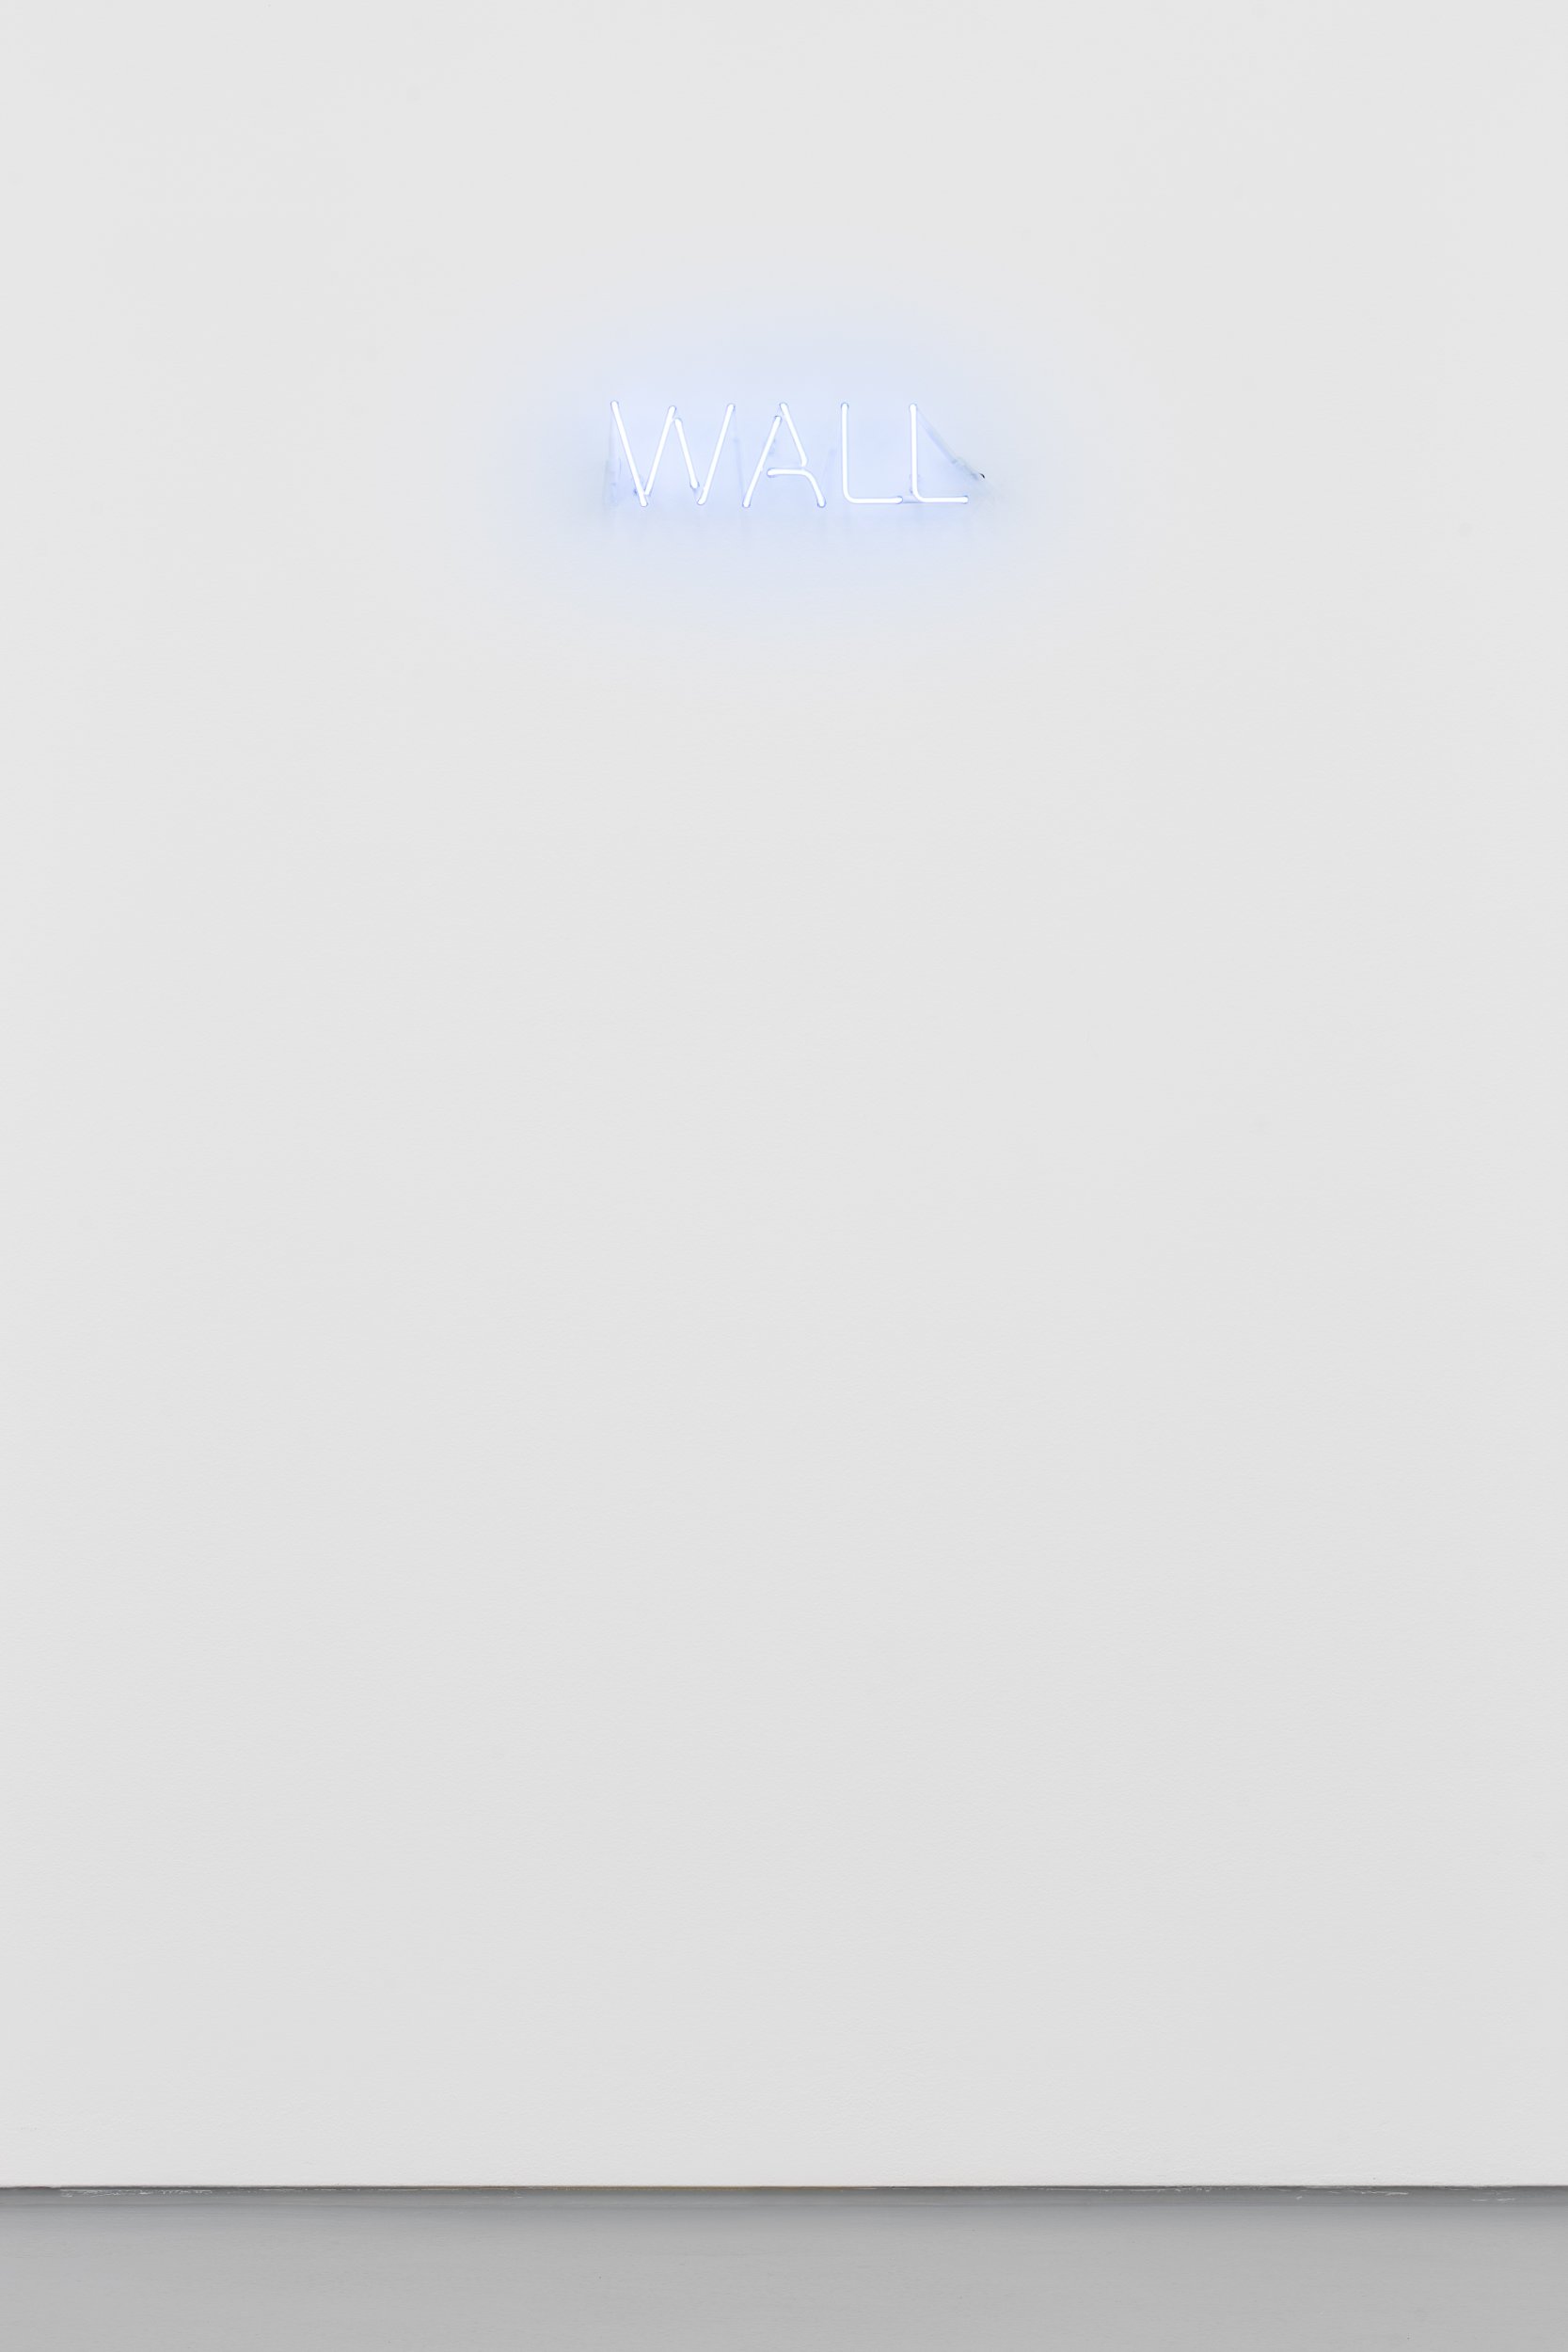 John Wood and Paul Harrison, Wall, 2021. Neon. 11 x 35 cm. Ed. 3+2 AP
